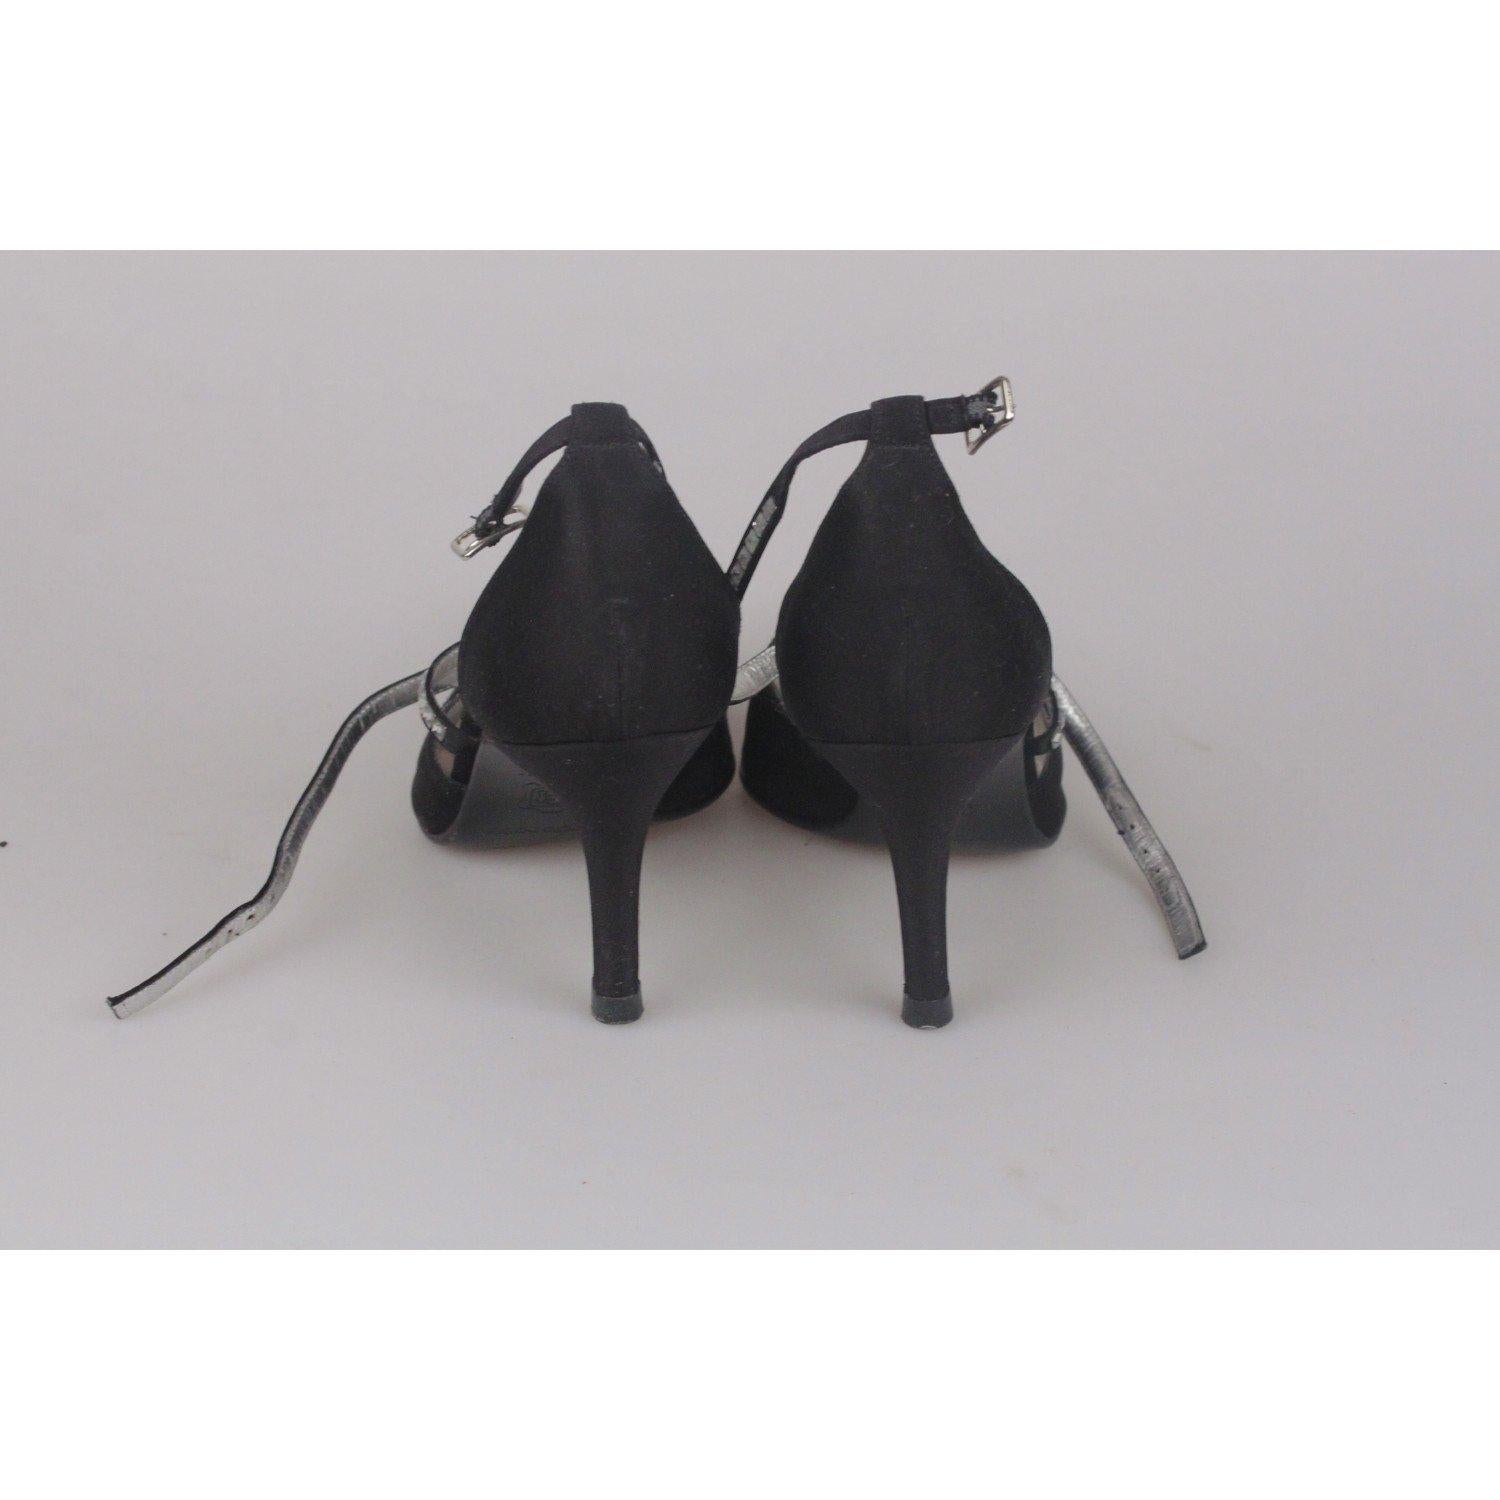 SERGIO ROSSI BlackFabric D'Orsay Shoes HEELS PUMPS with Crystals 36 IT 1